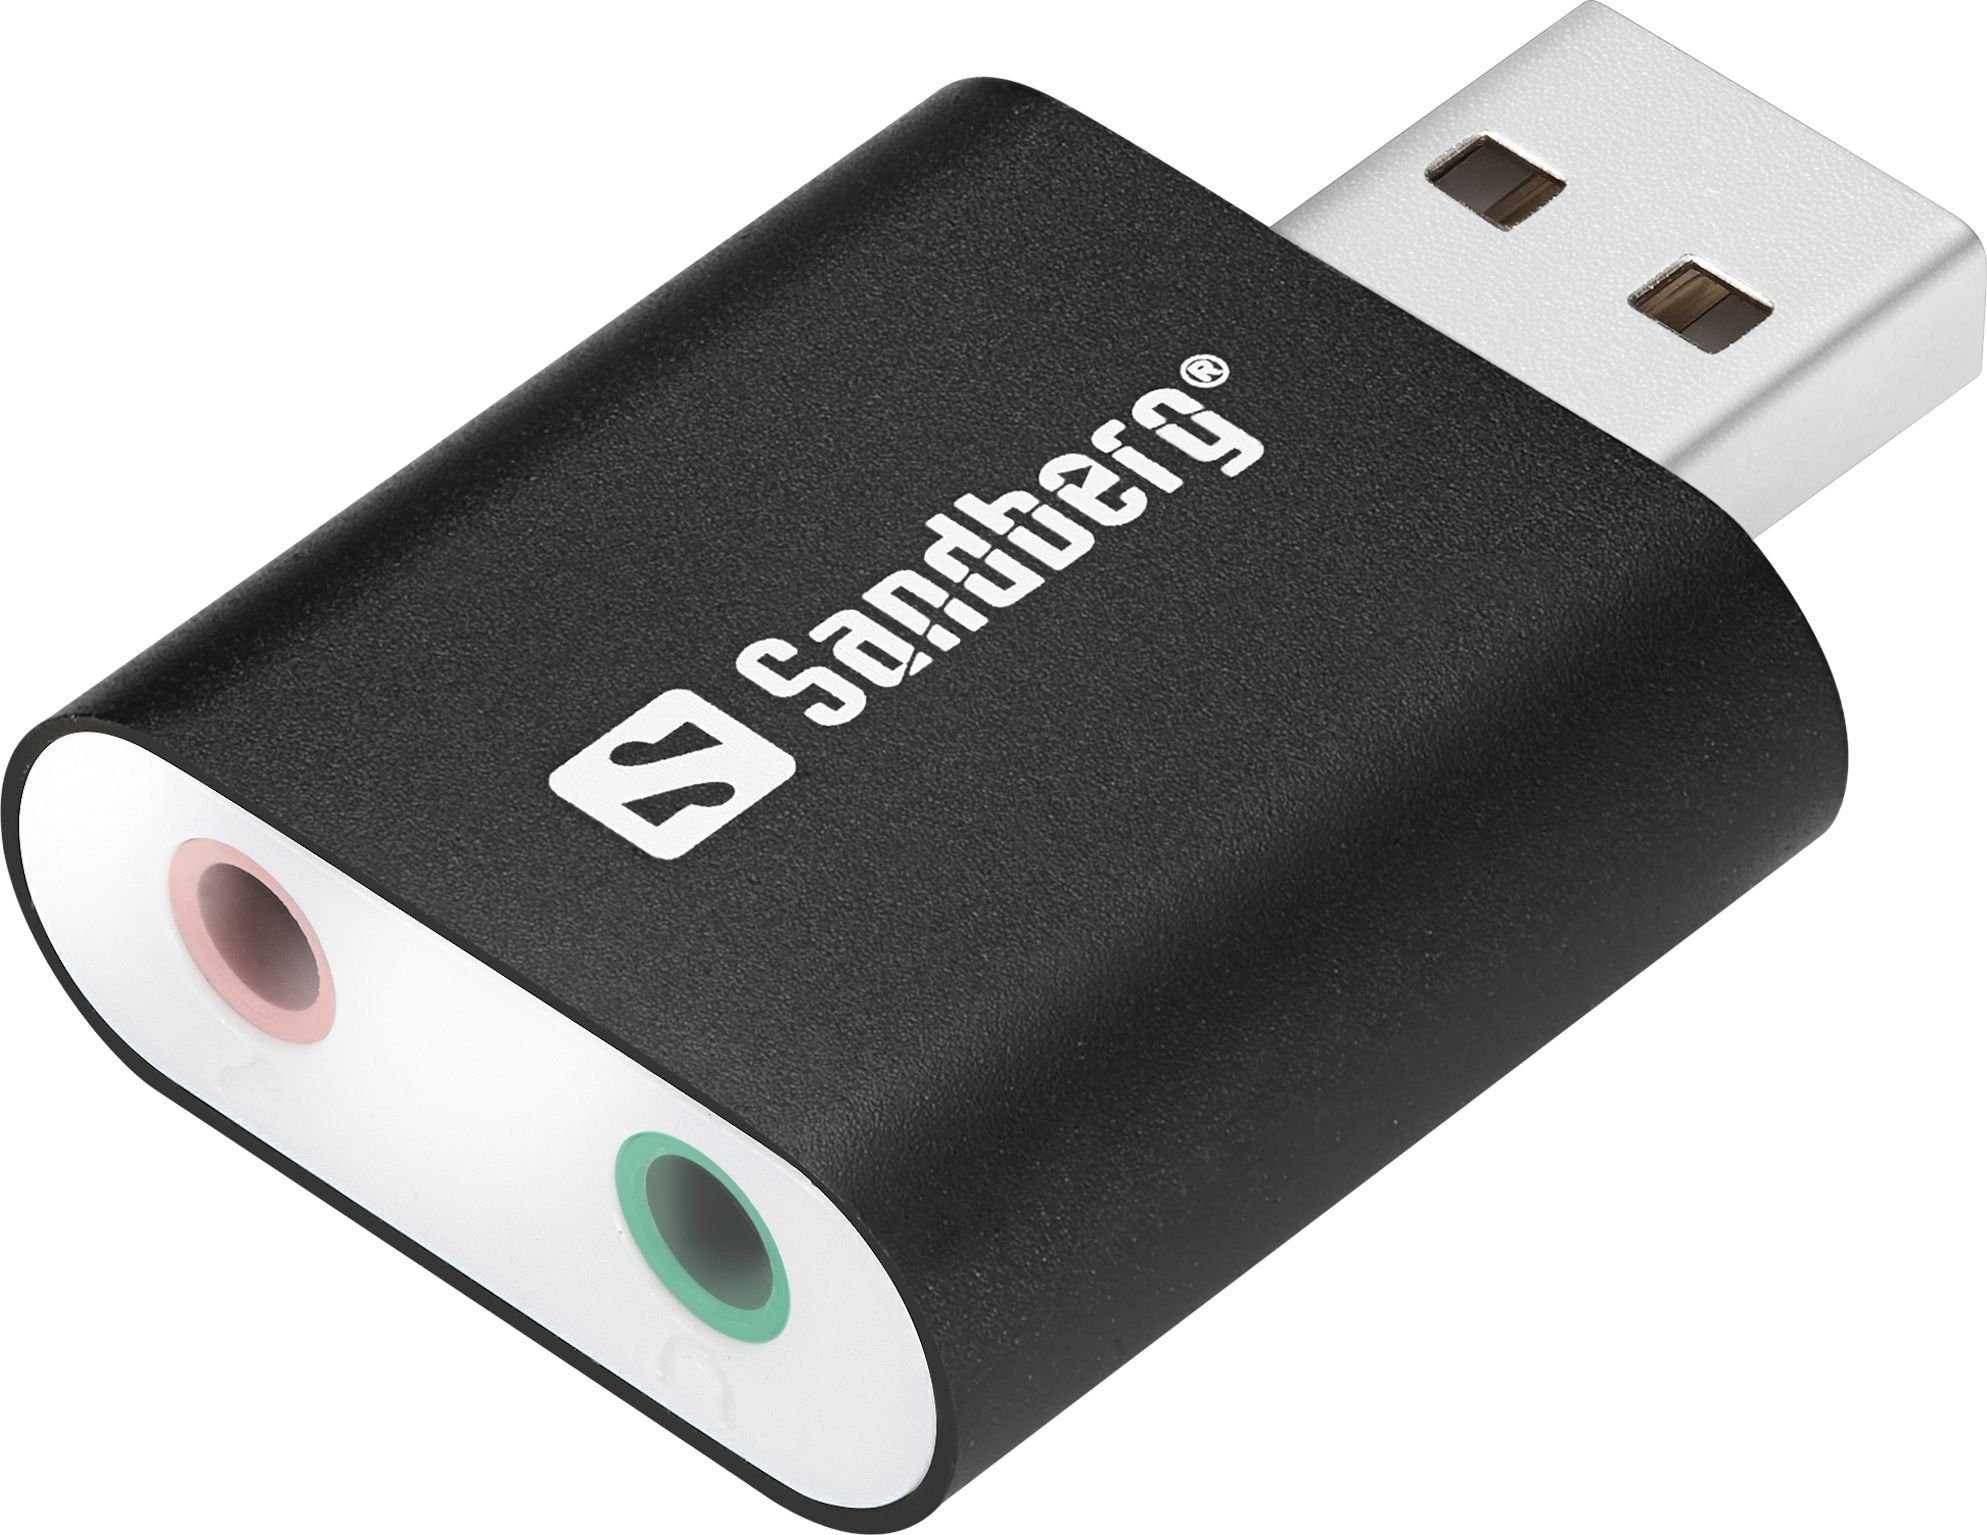 Placi de sunet - Placă de sunet externă Sandberg USB to Sound Link, interfata USB, 2 canale